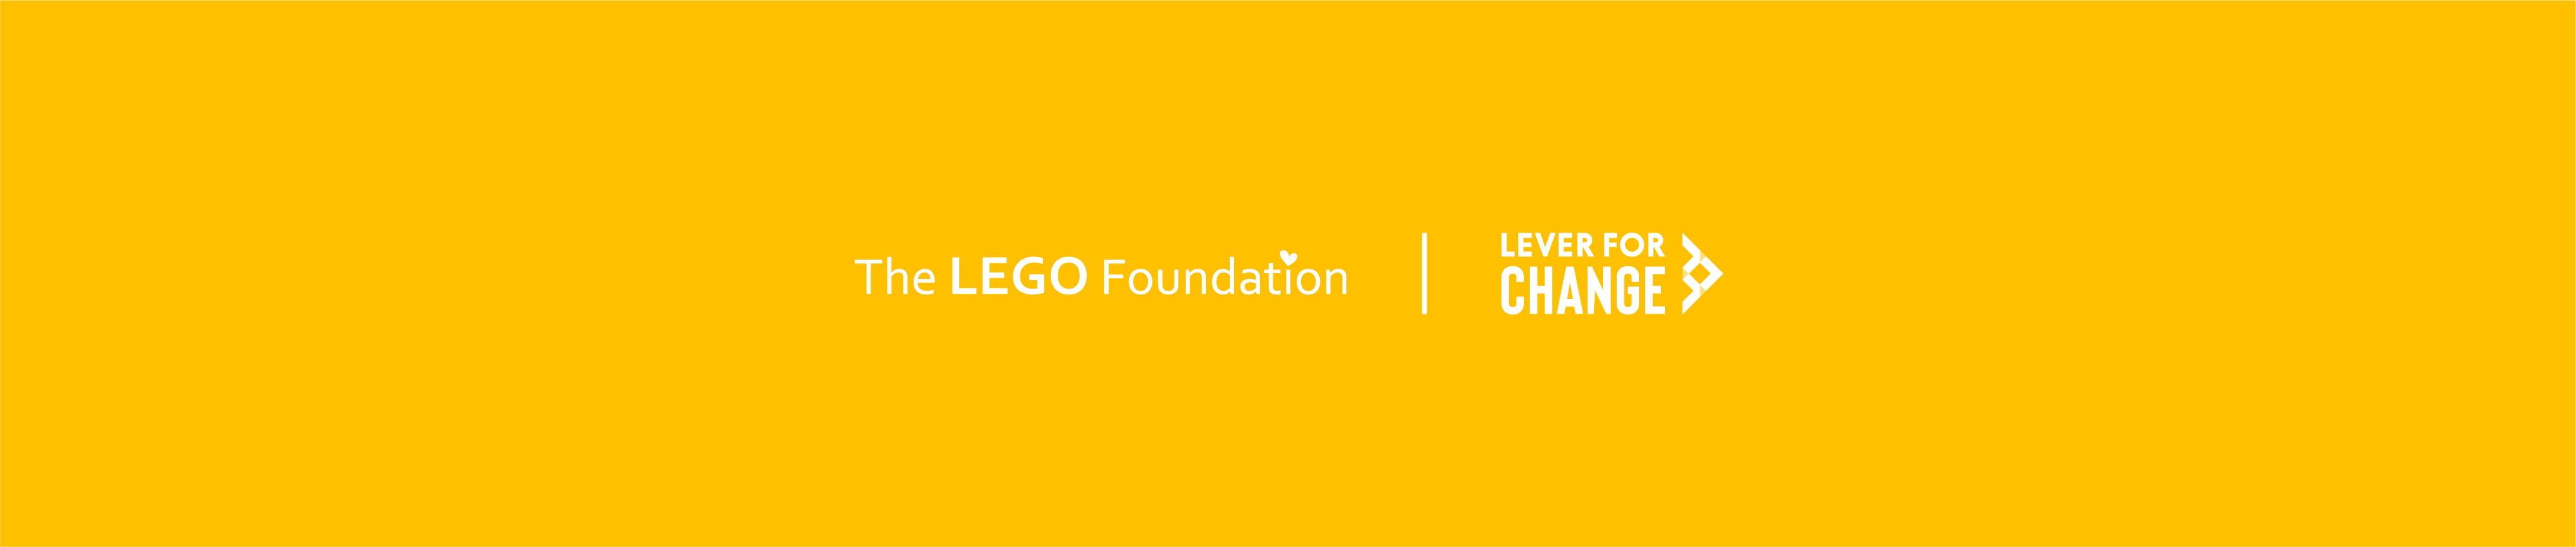 Lever For Change Logo